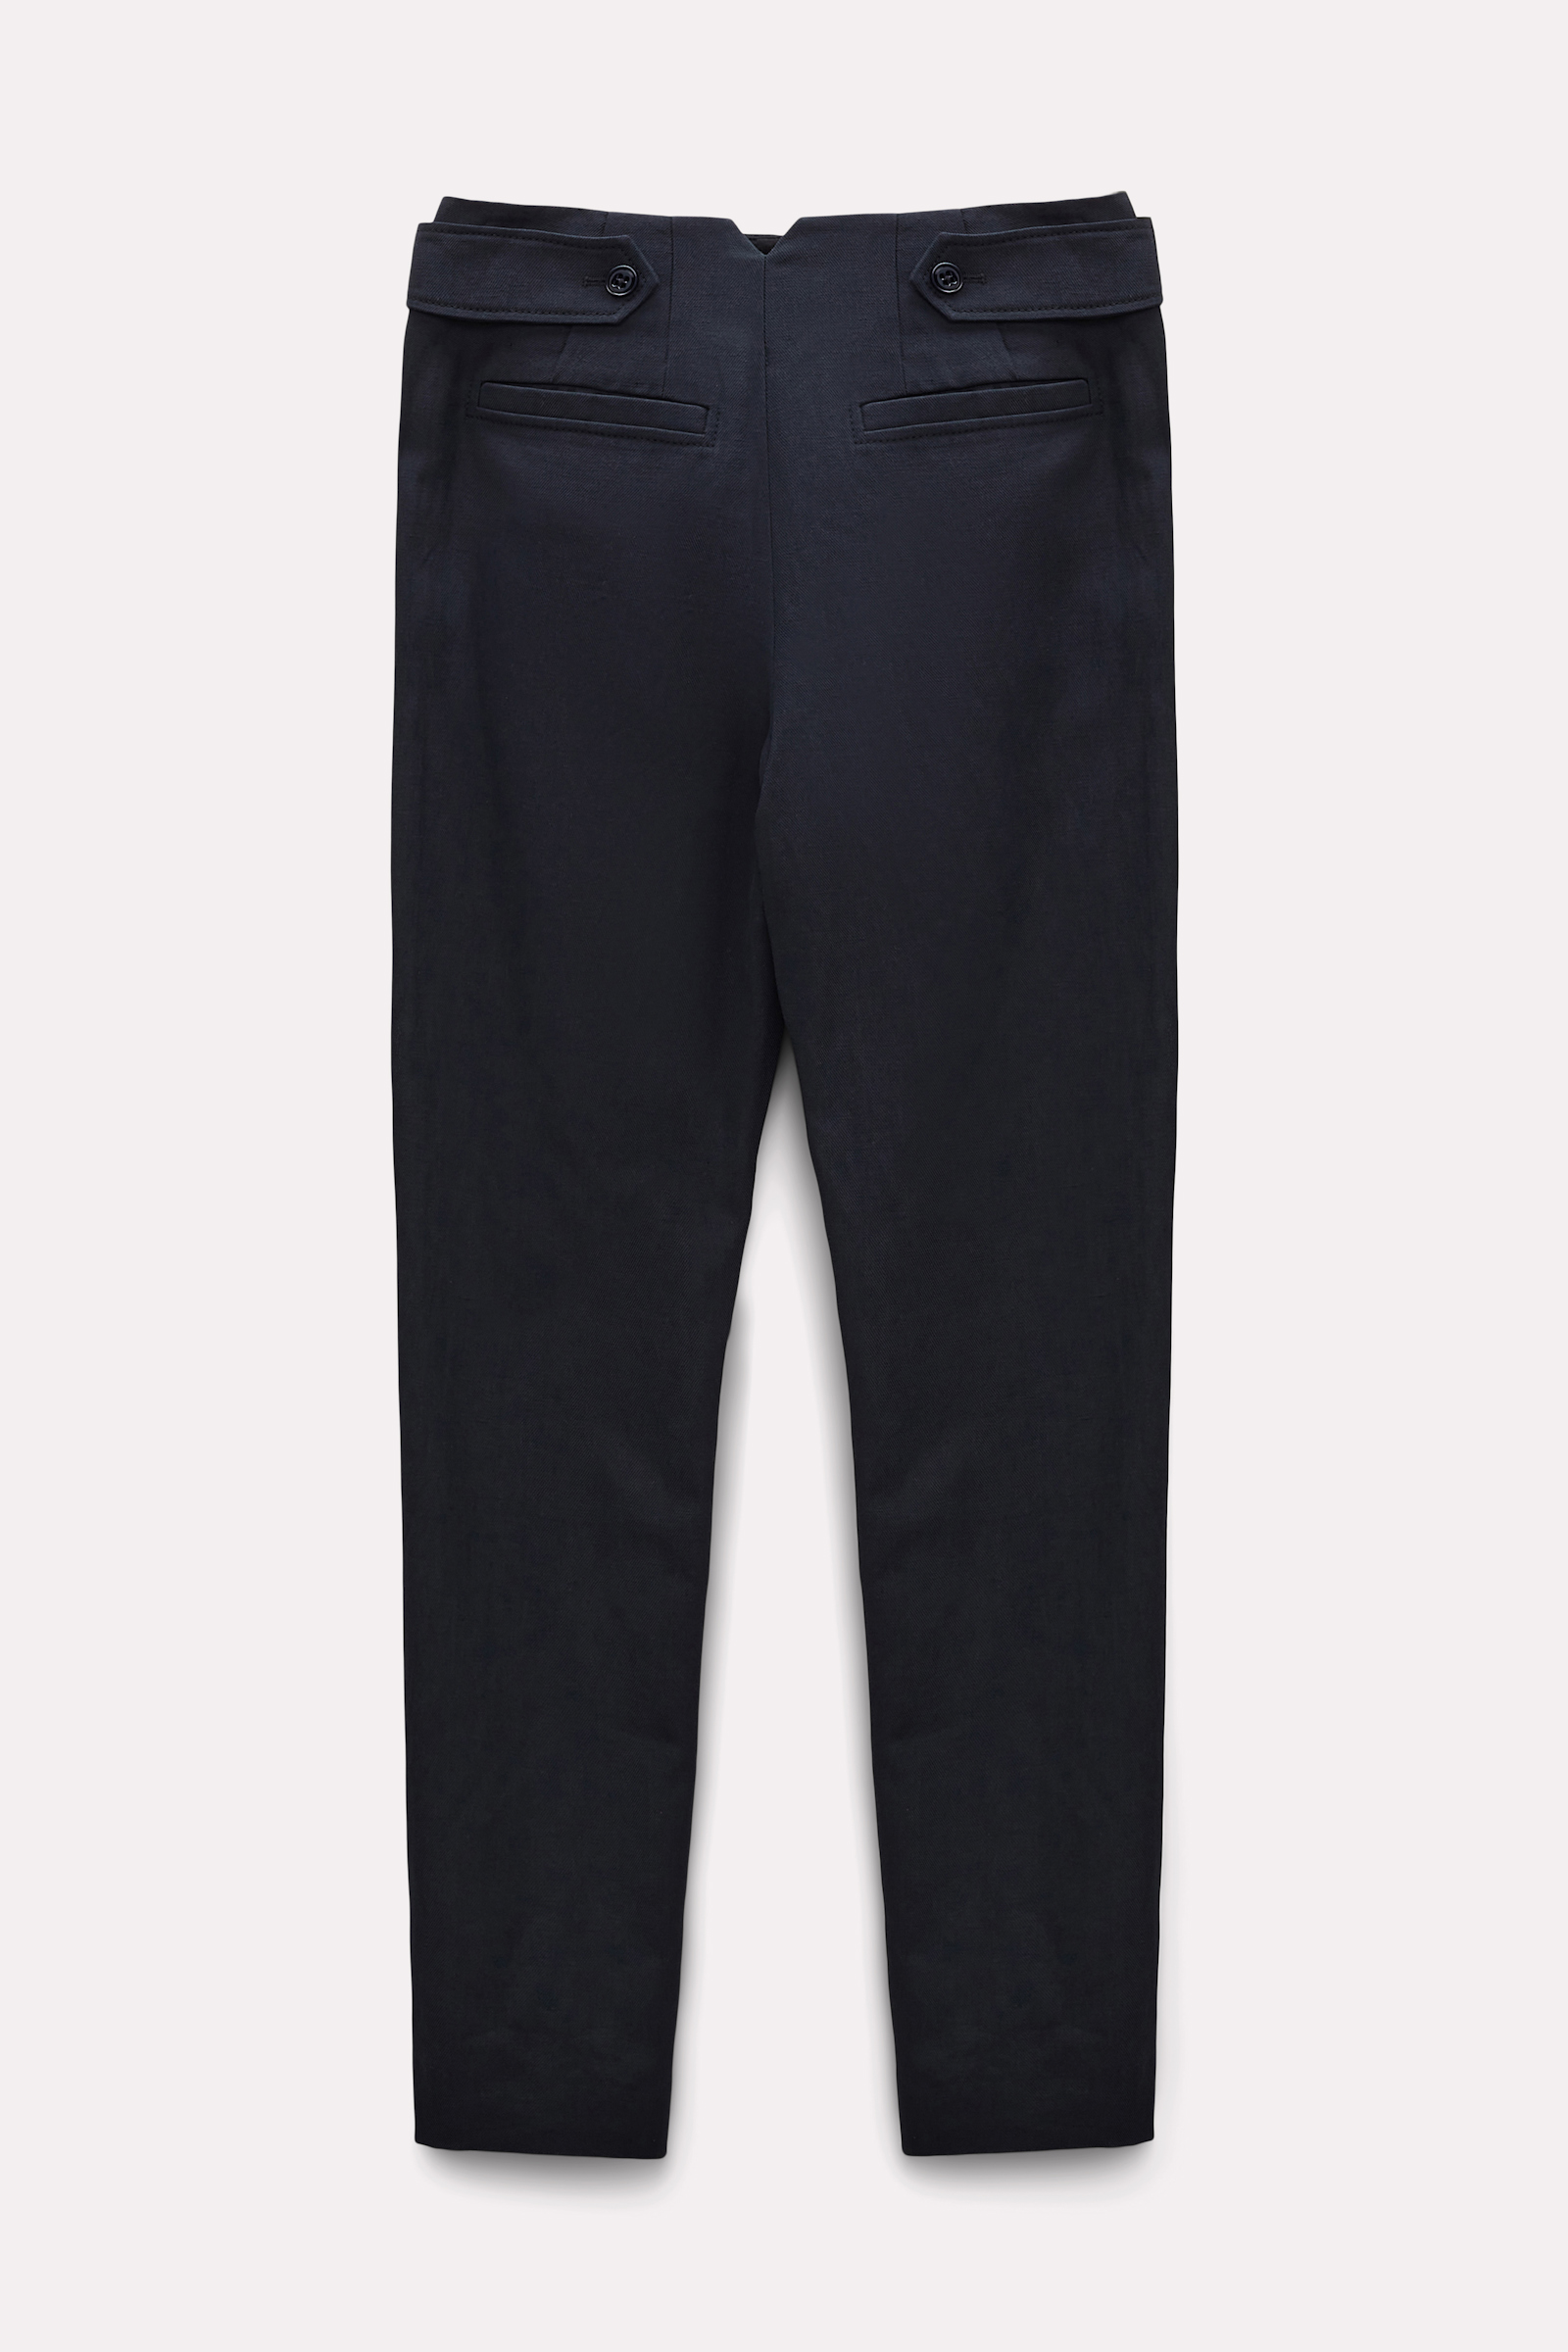 Dorothee Schumacher Lightweight pants in cotton-linen dark navy